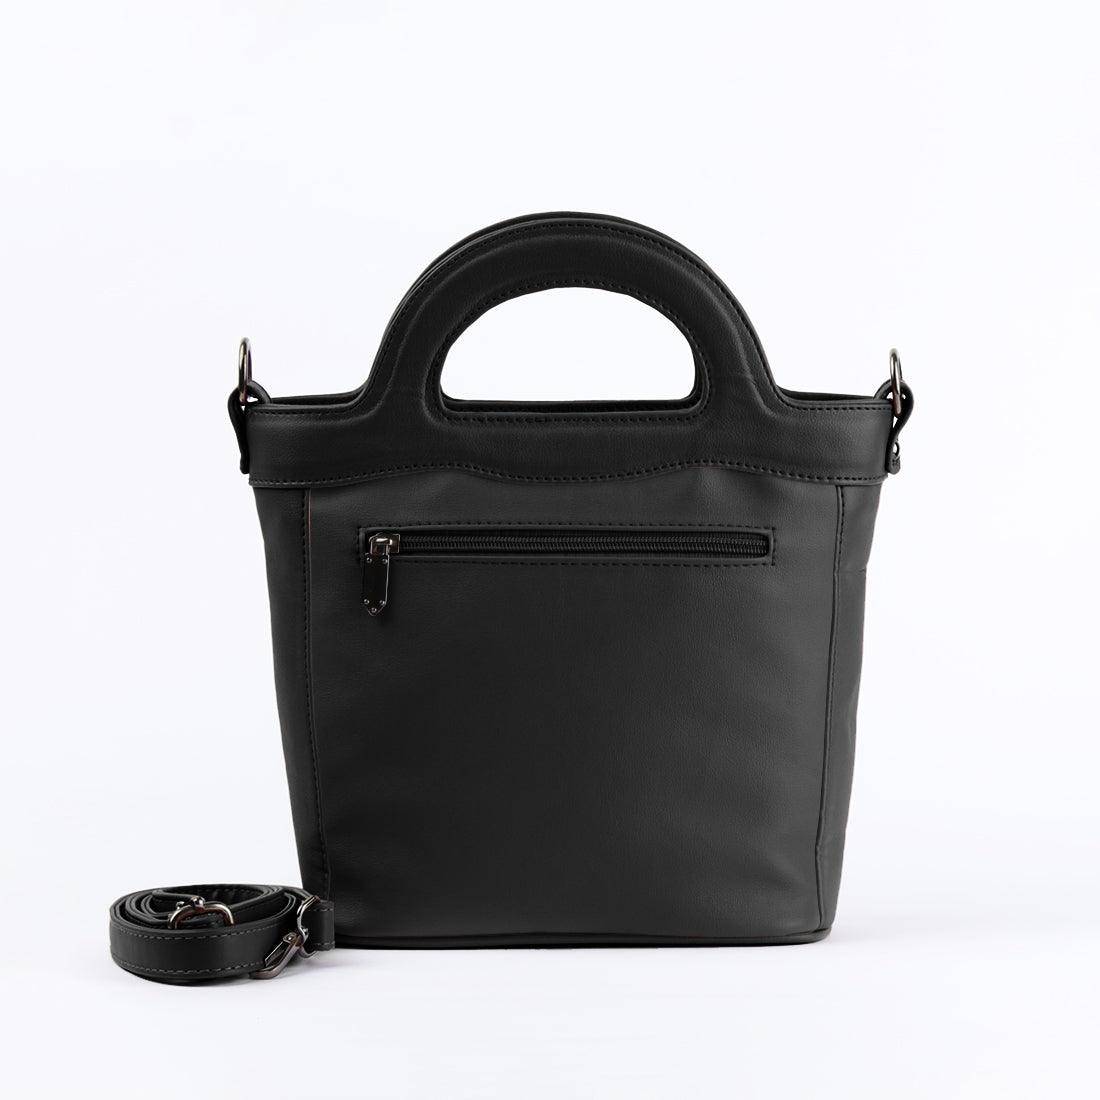 Black Top Handle Handbag White Floral - CANVAEGYPT